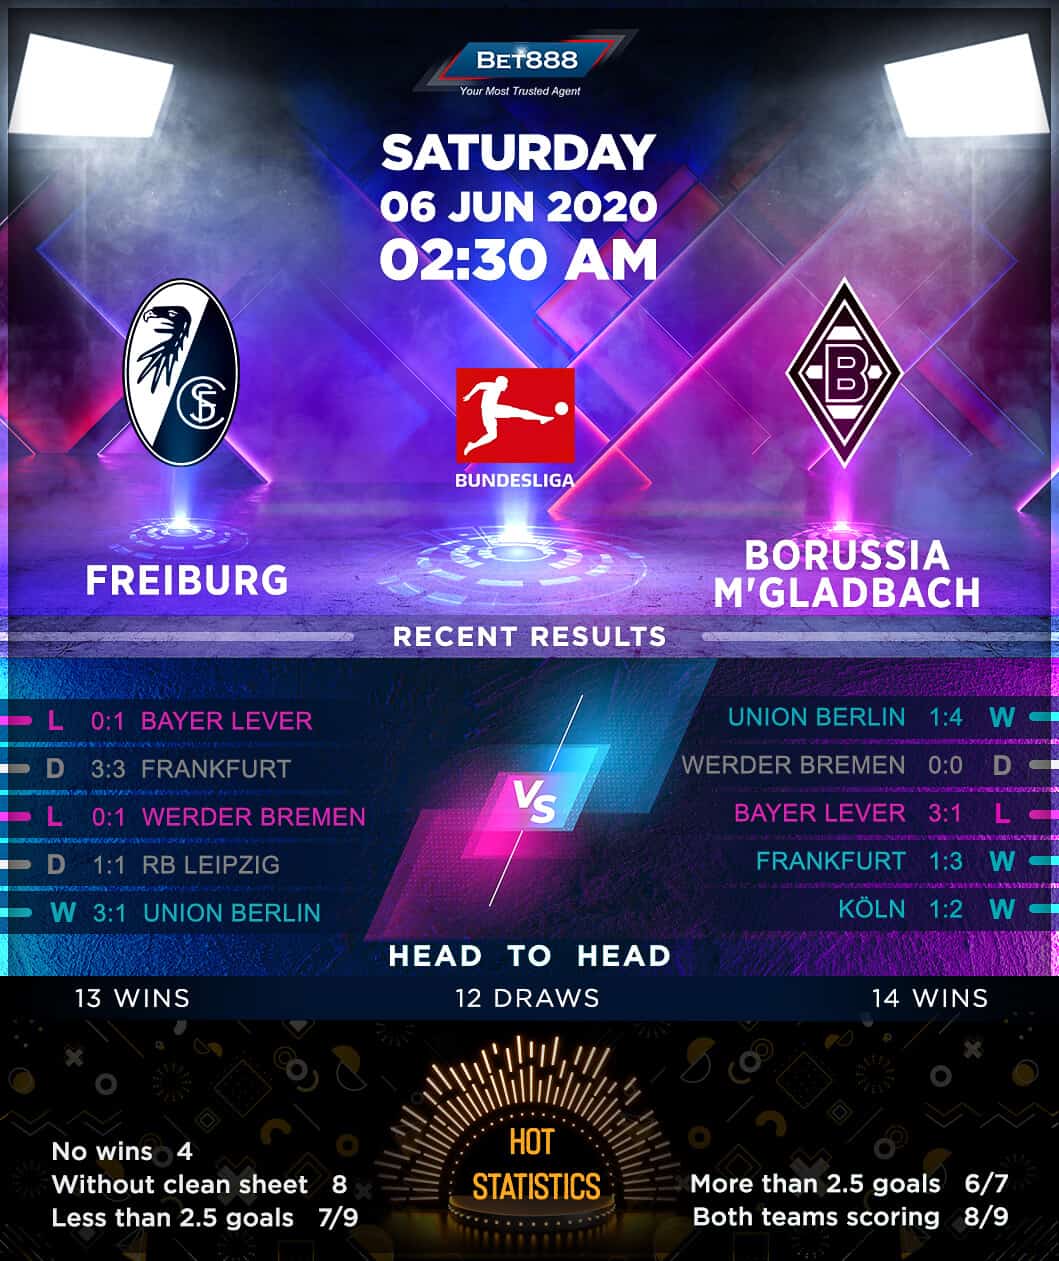 Freibrug vs Borussia Mönchengladbach 06/06/20